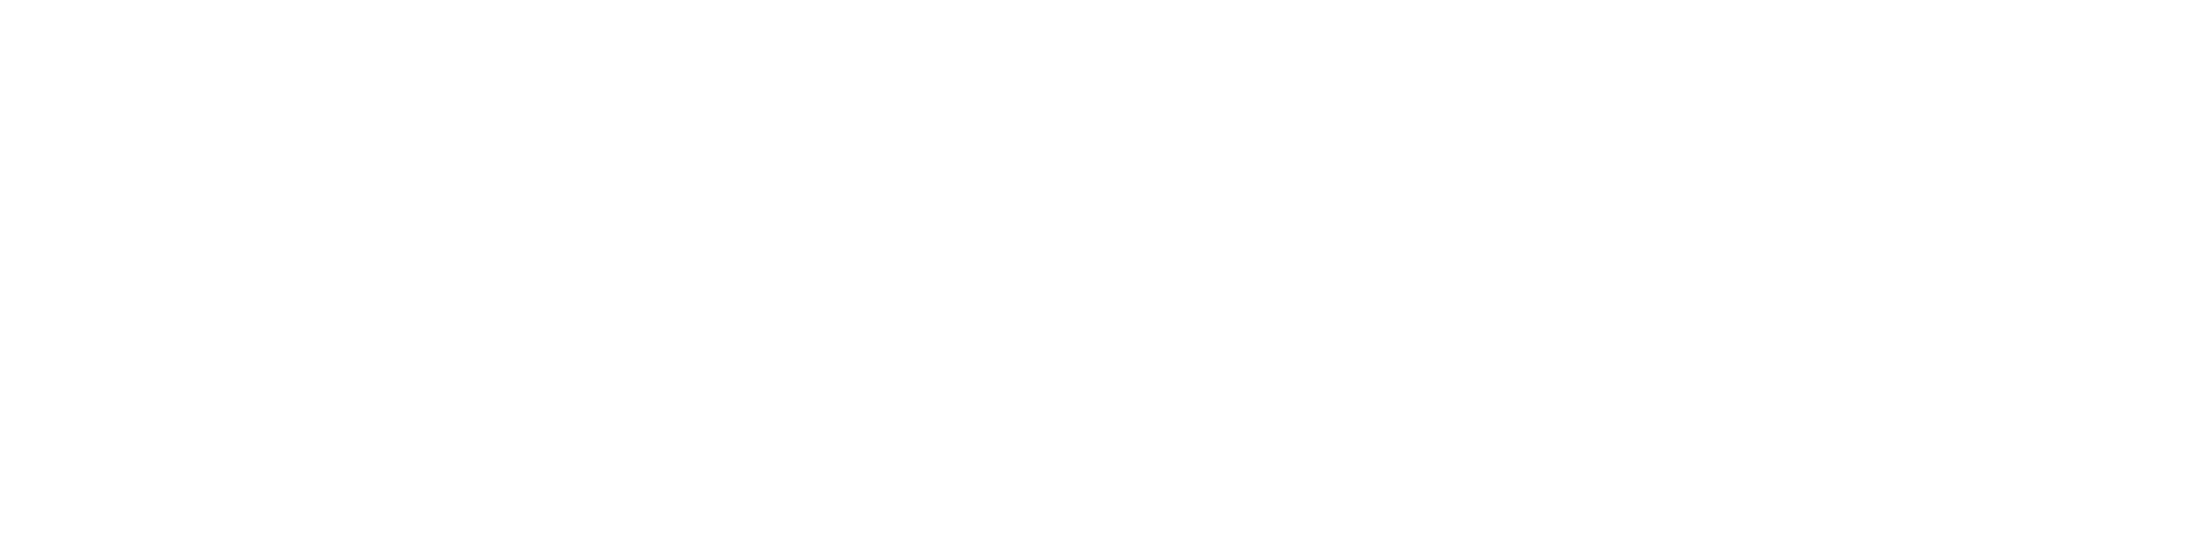 Elite Tax Solutions